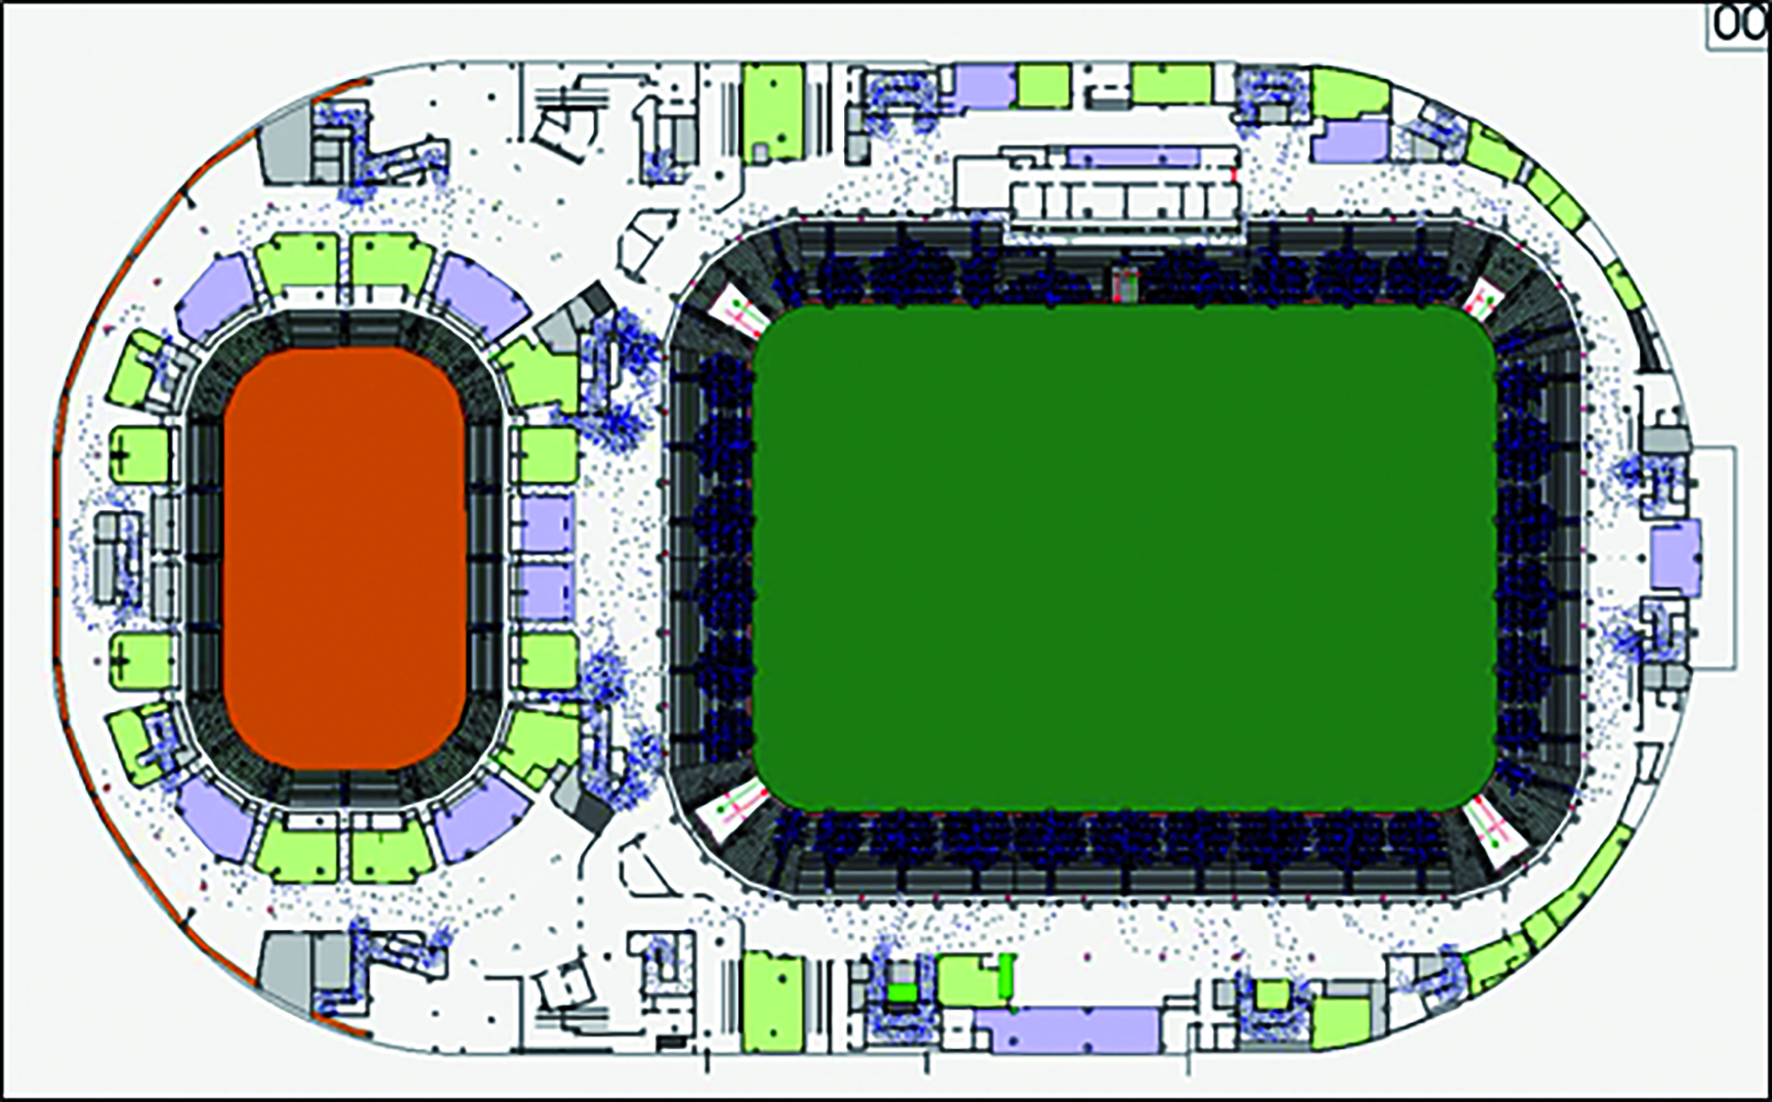 2D Stadium model view